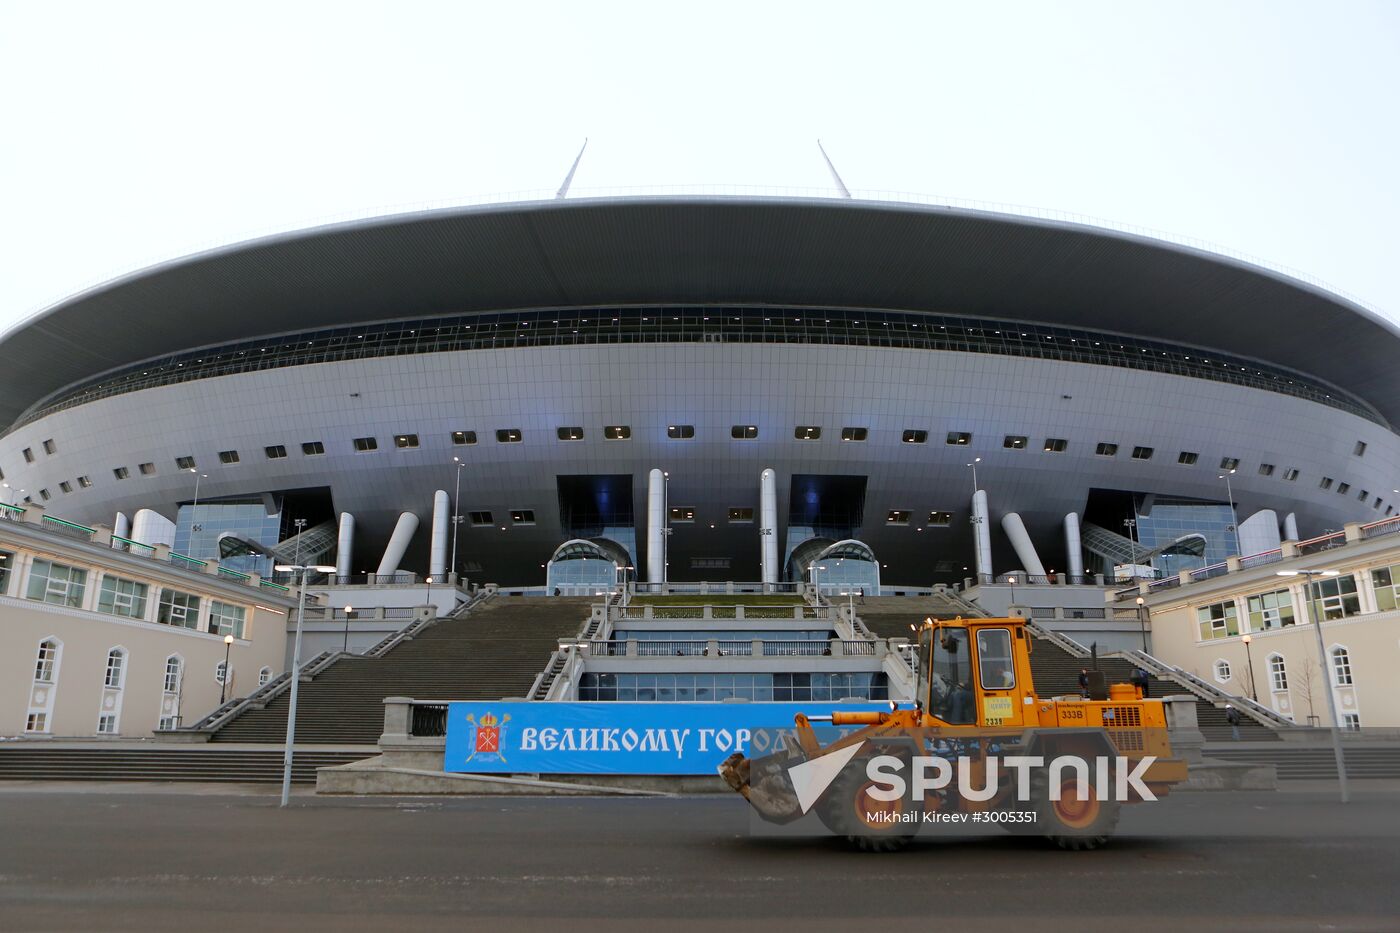 Zenit-Arena stadium in St. Petersburg